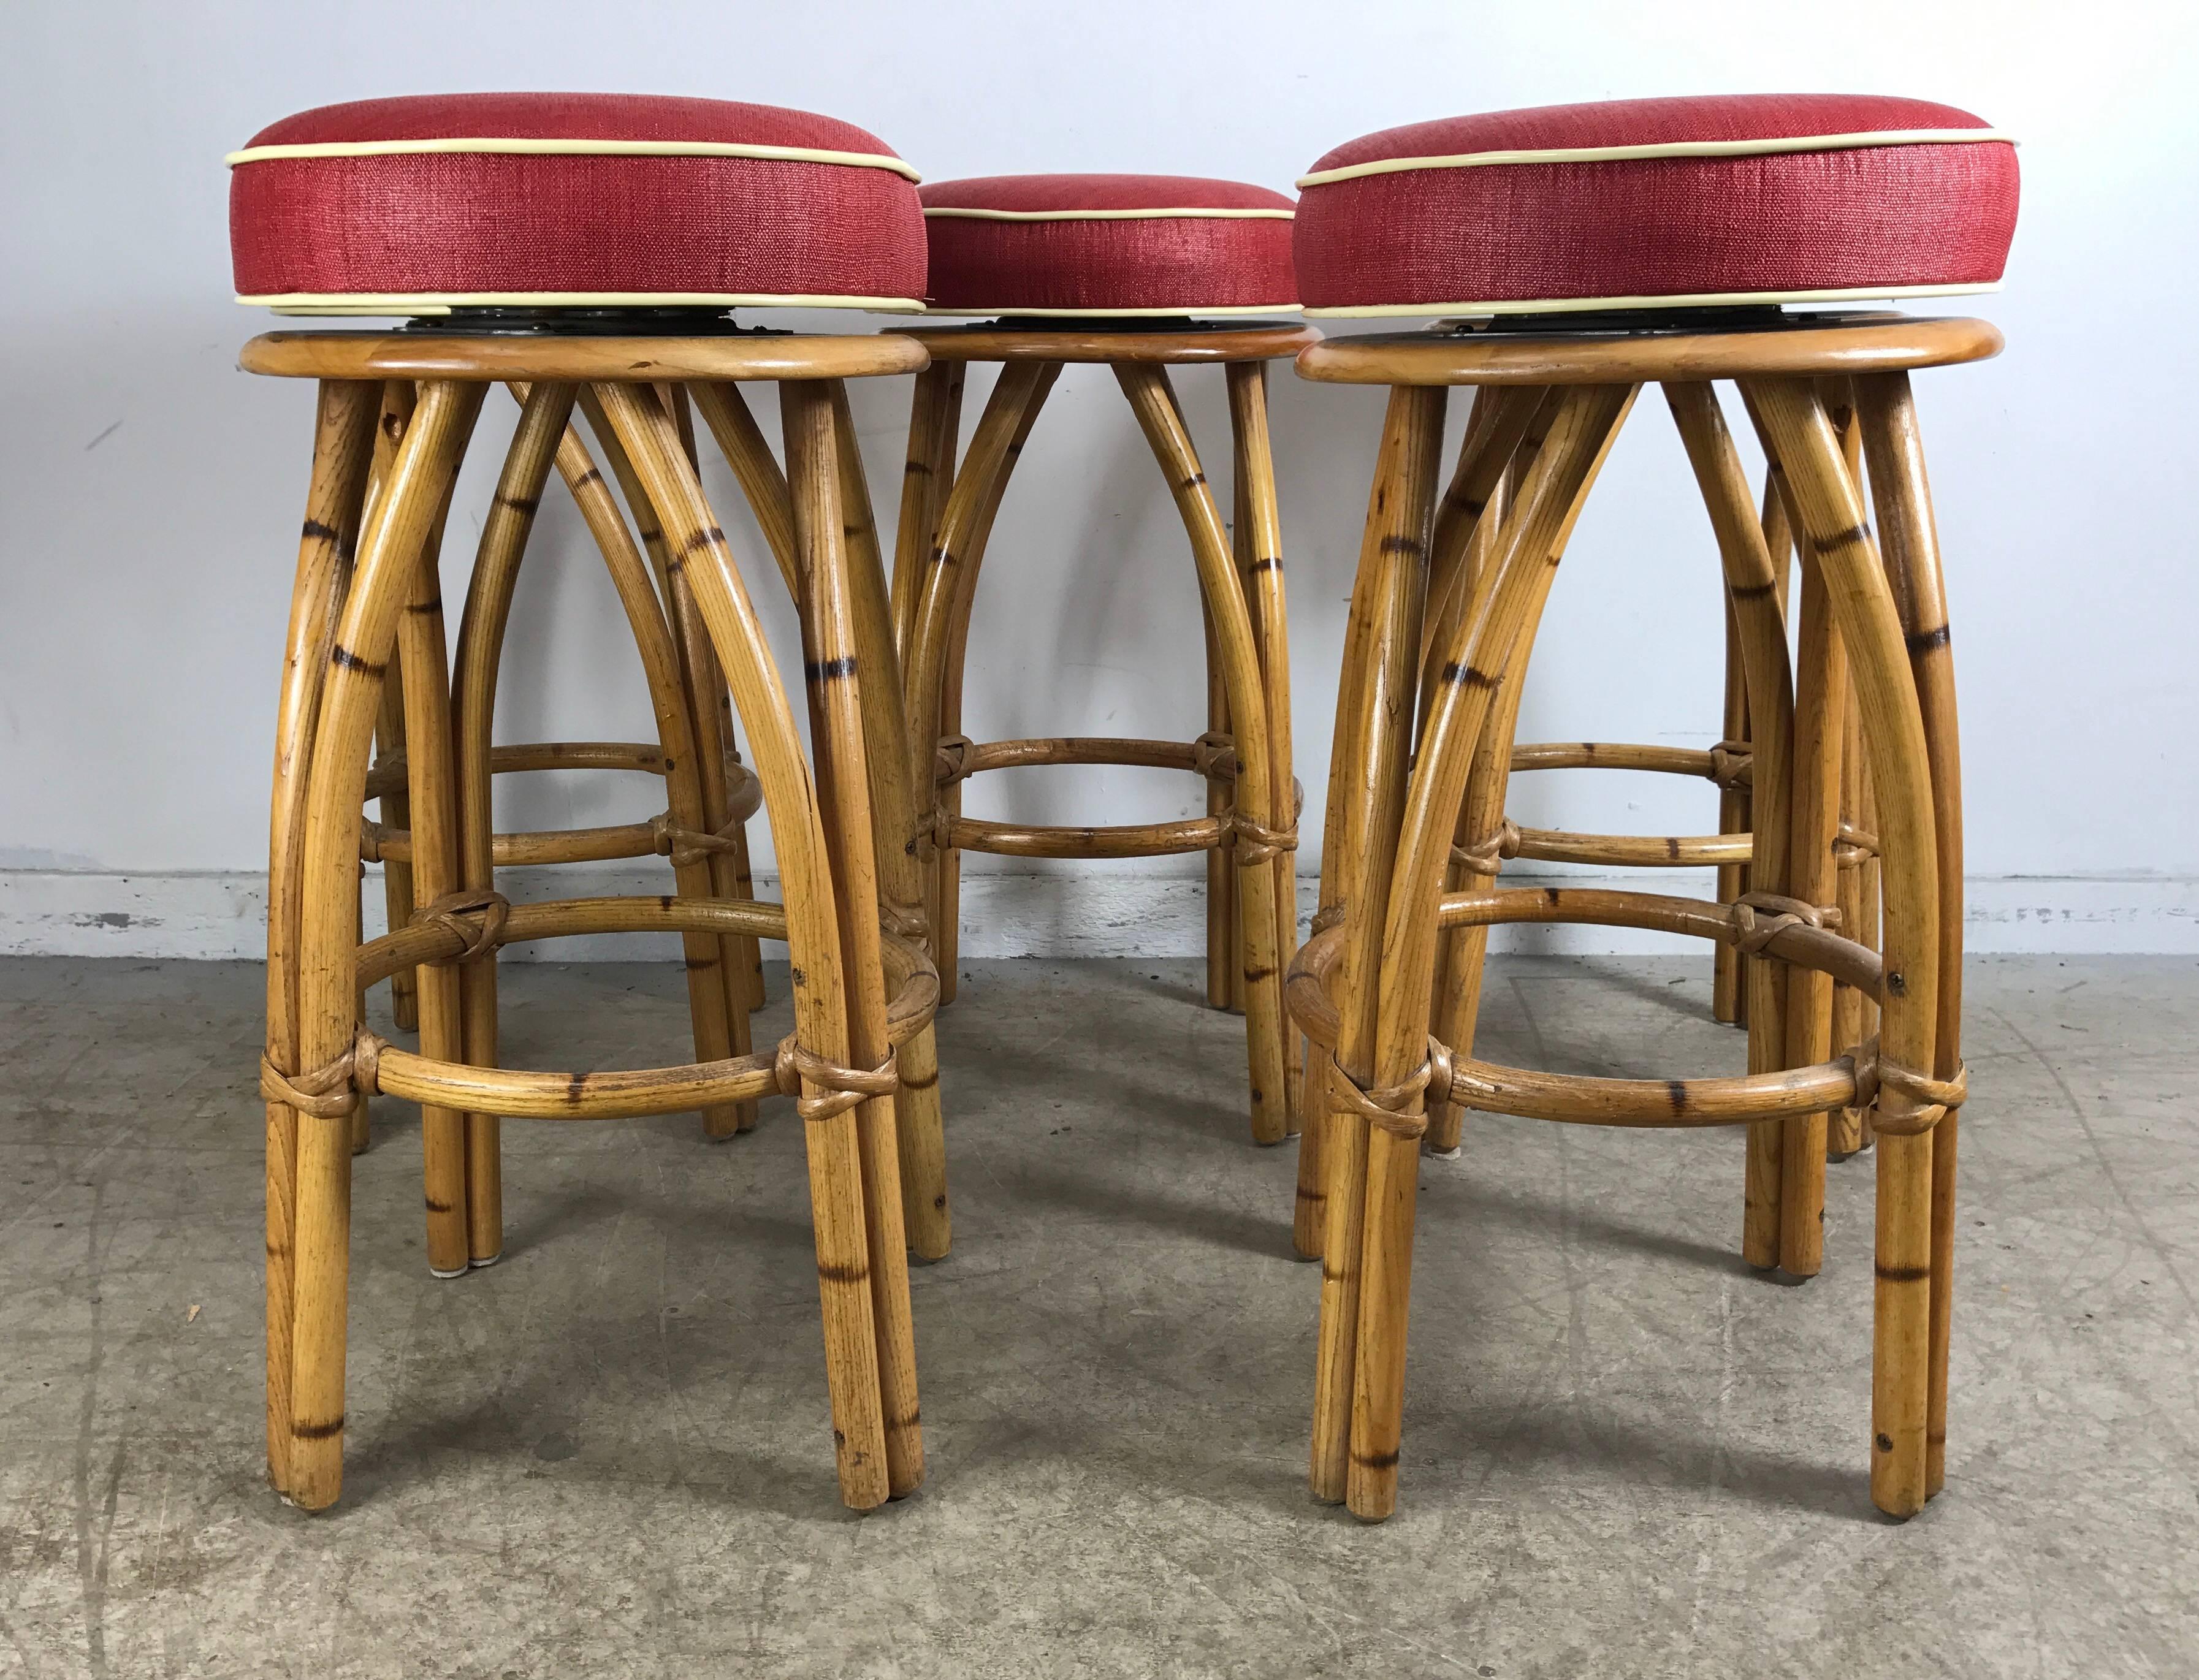 Classic Mid-Century Modern design, set of five bamboo swivel bar or counter stools, beautiful original finish, new upholstered tops. Stunning.